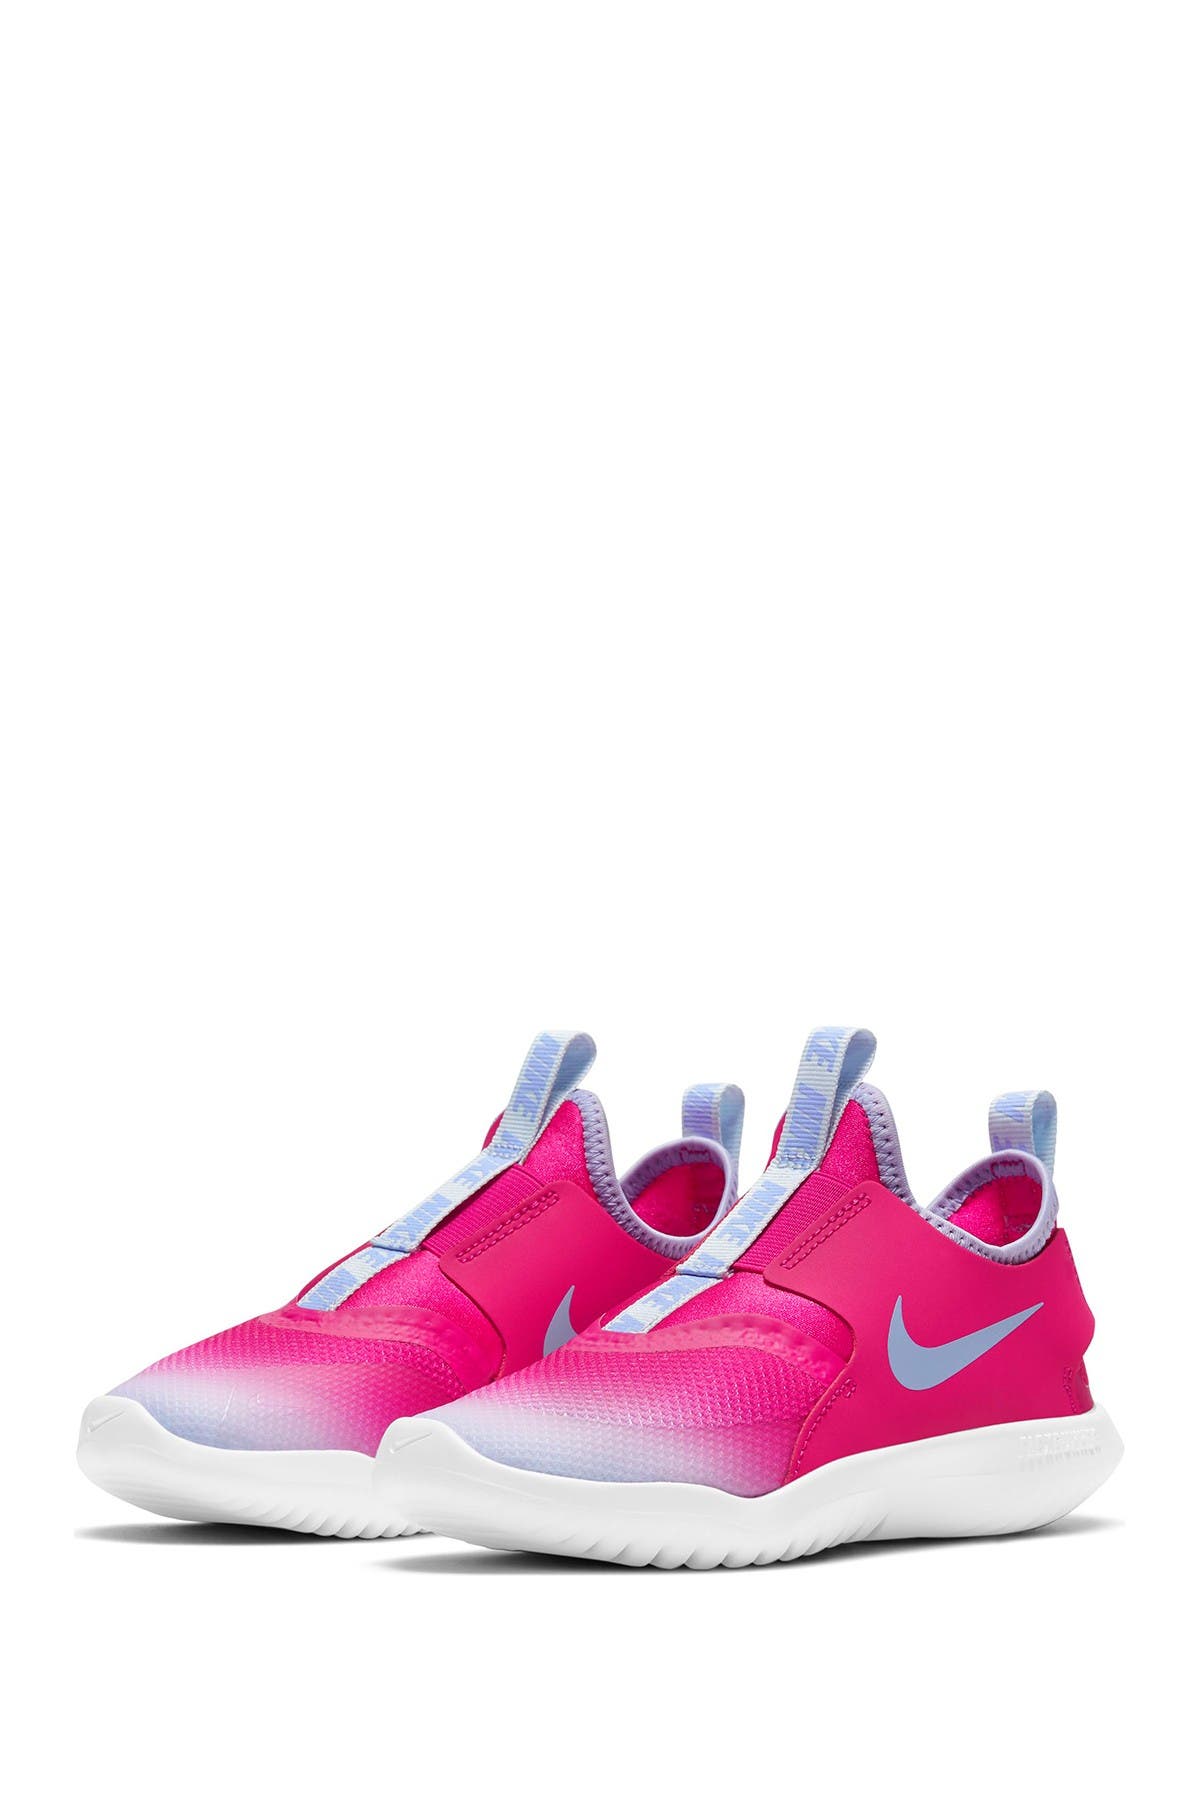 hot pink nike women's sneakers